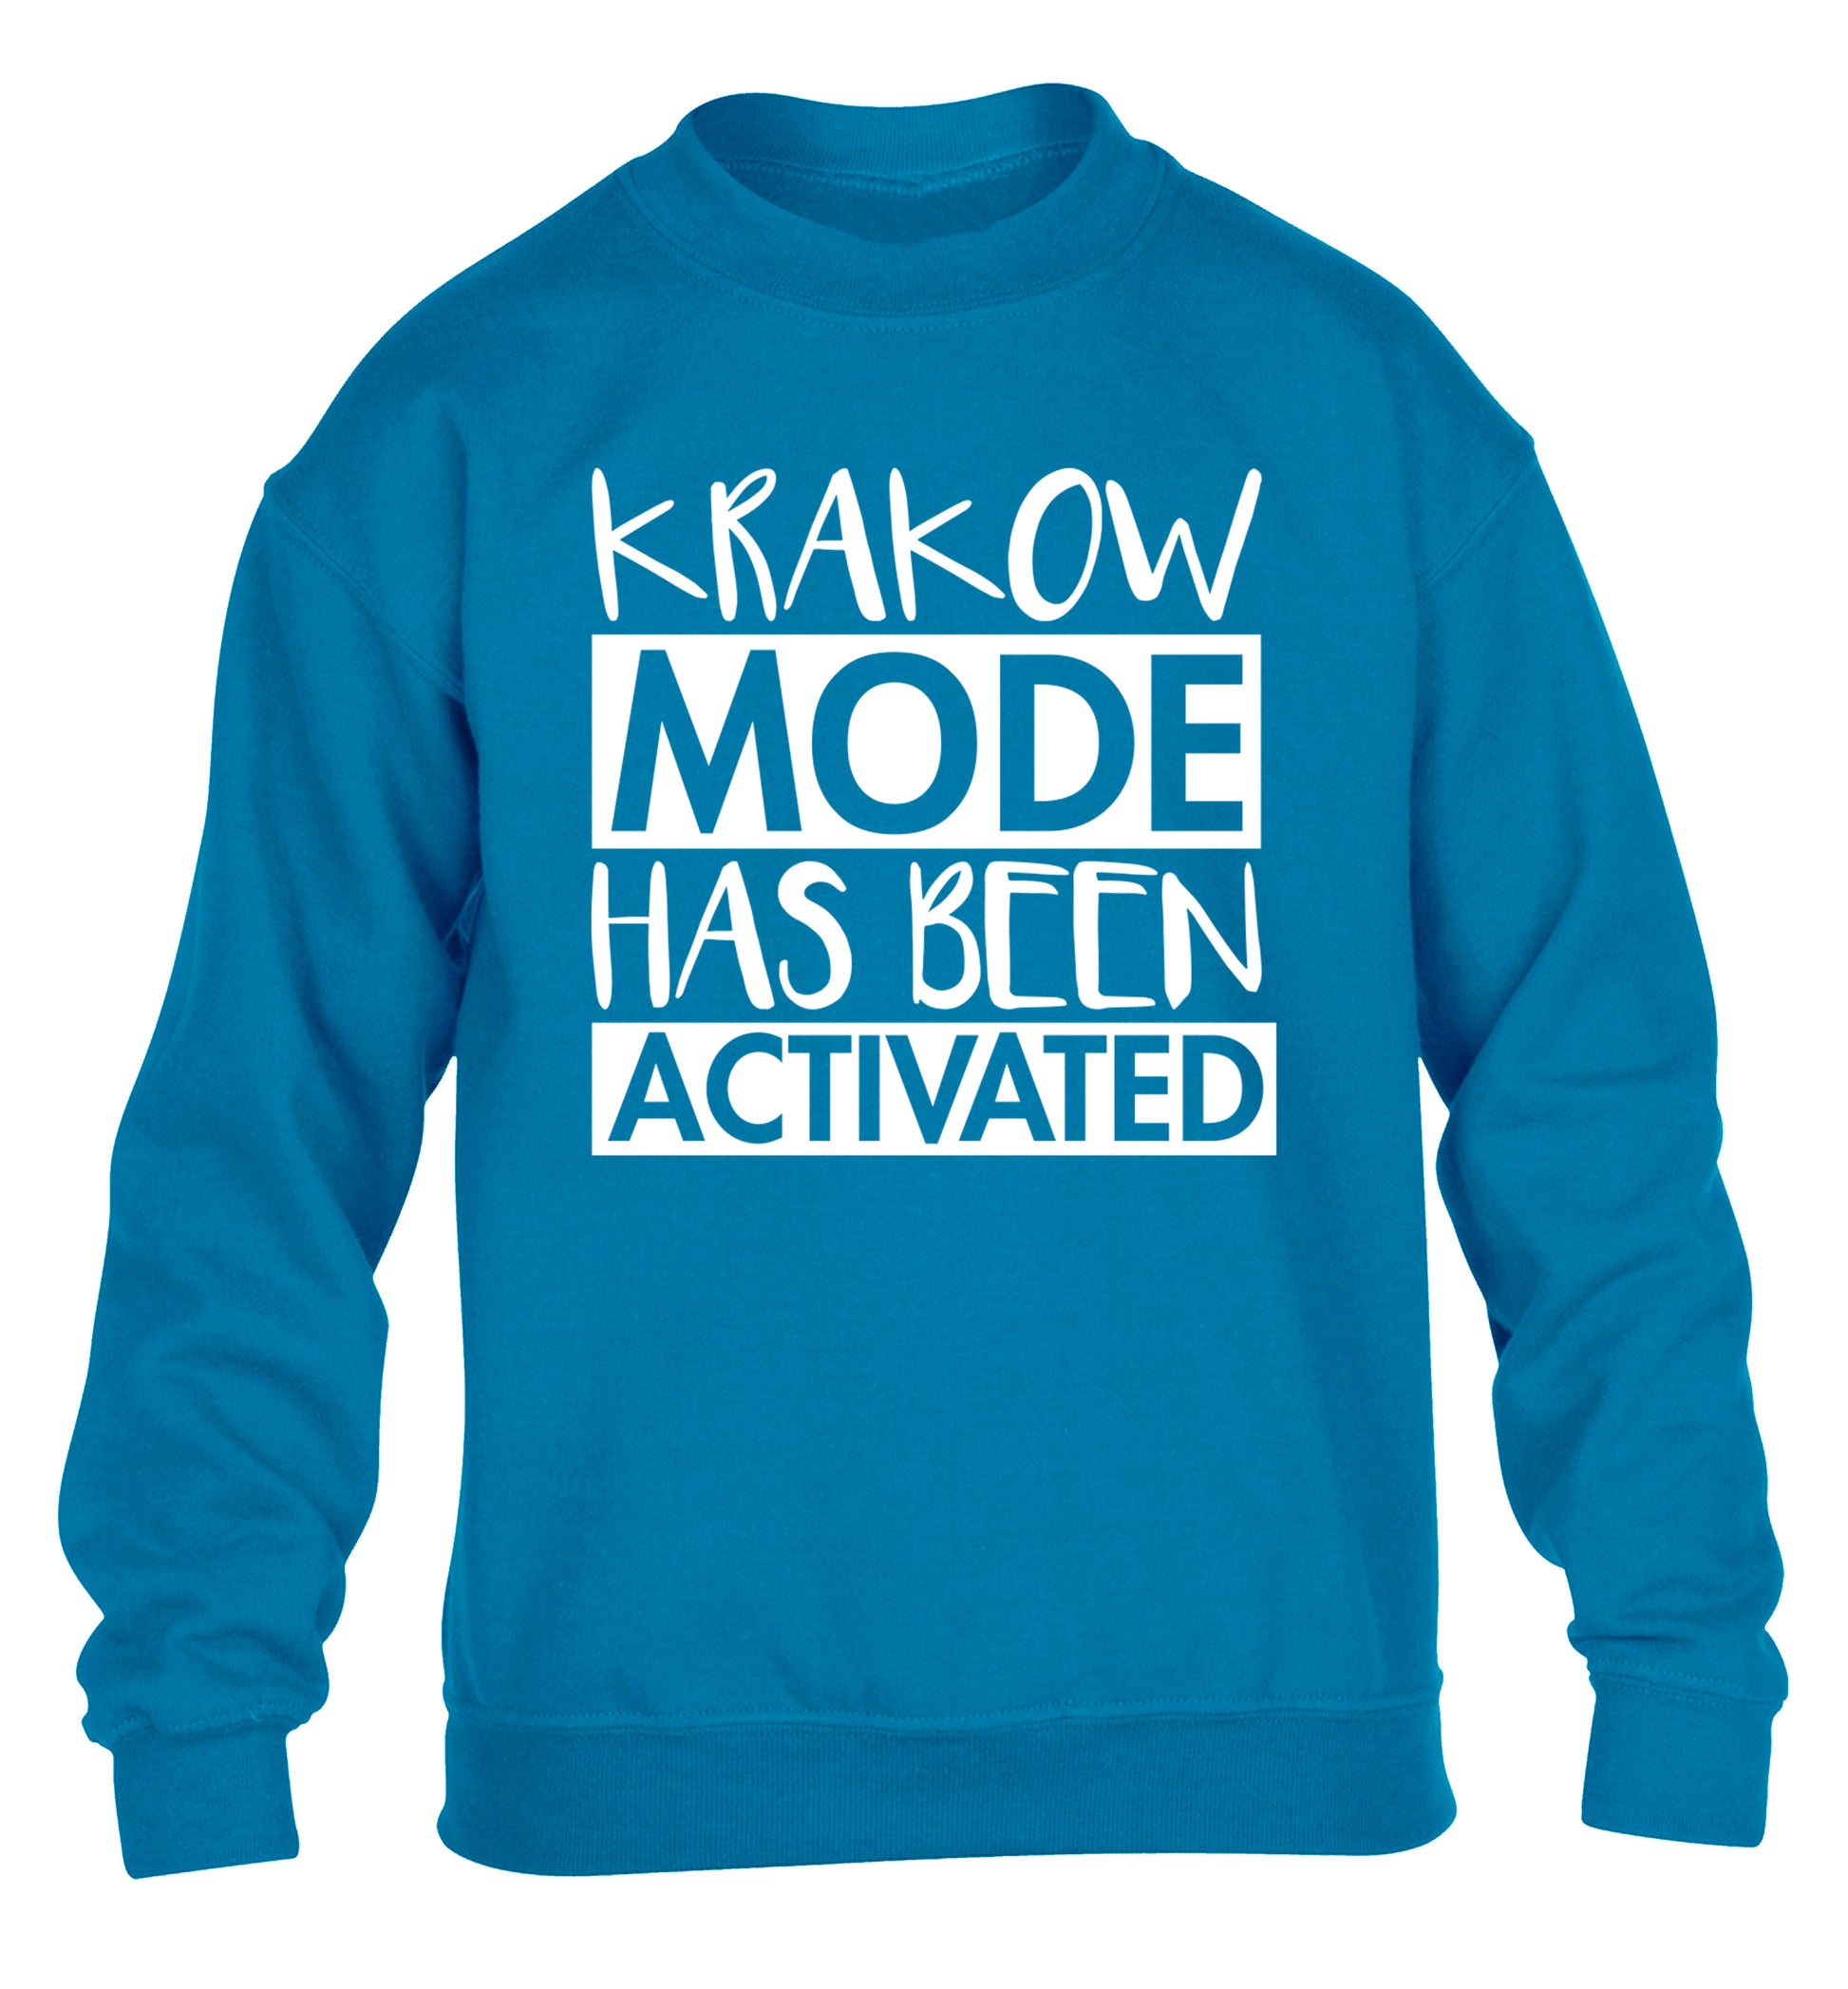 Krakow mode has been activated children's blue sweater 12-13 Years